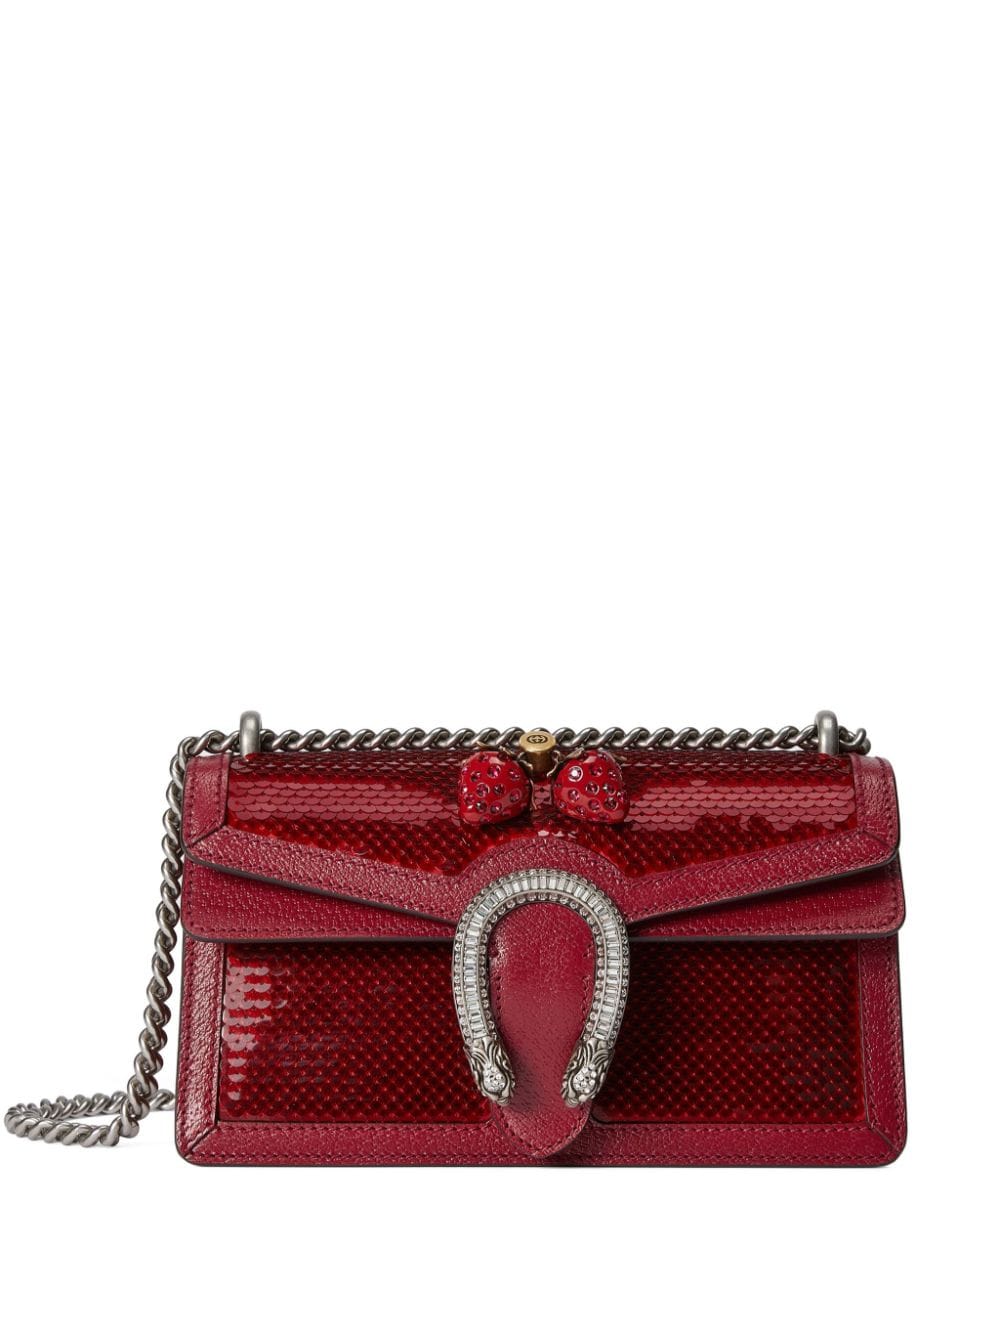 Gucci Dionysus Medium Sequined Shoulder Bag In Red